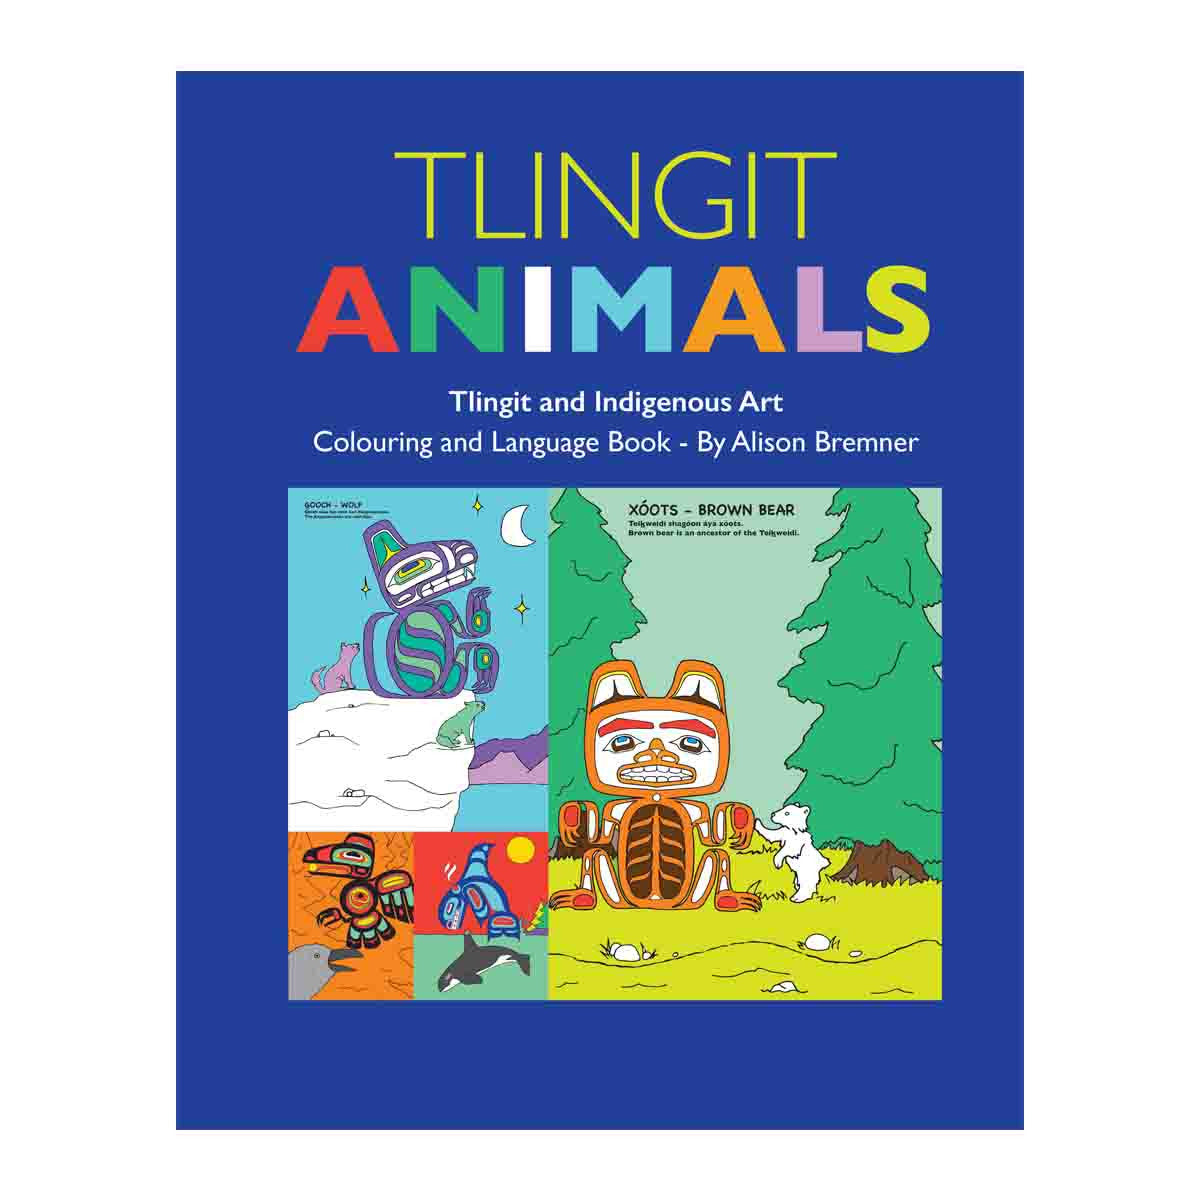 Colouring Book - Tlingit Animals by Alison Bremner